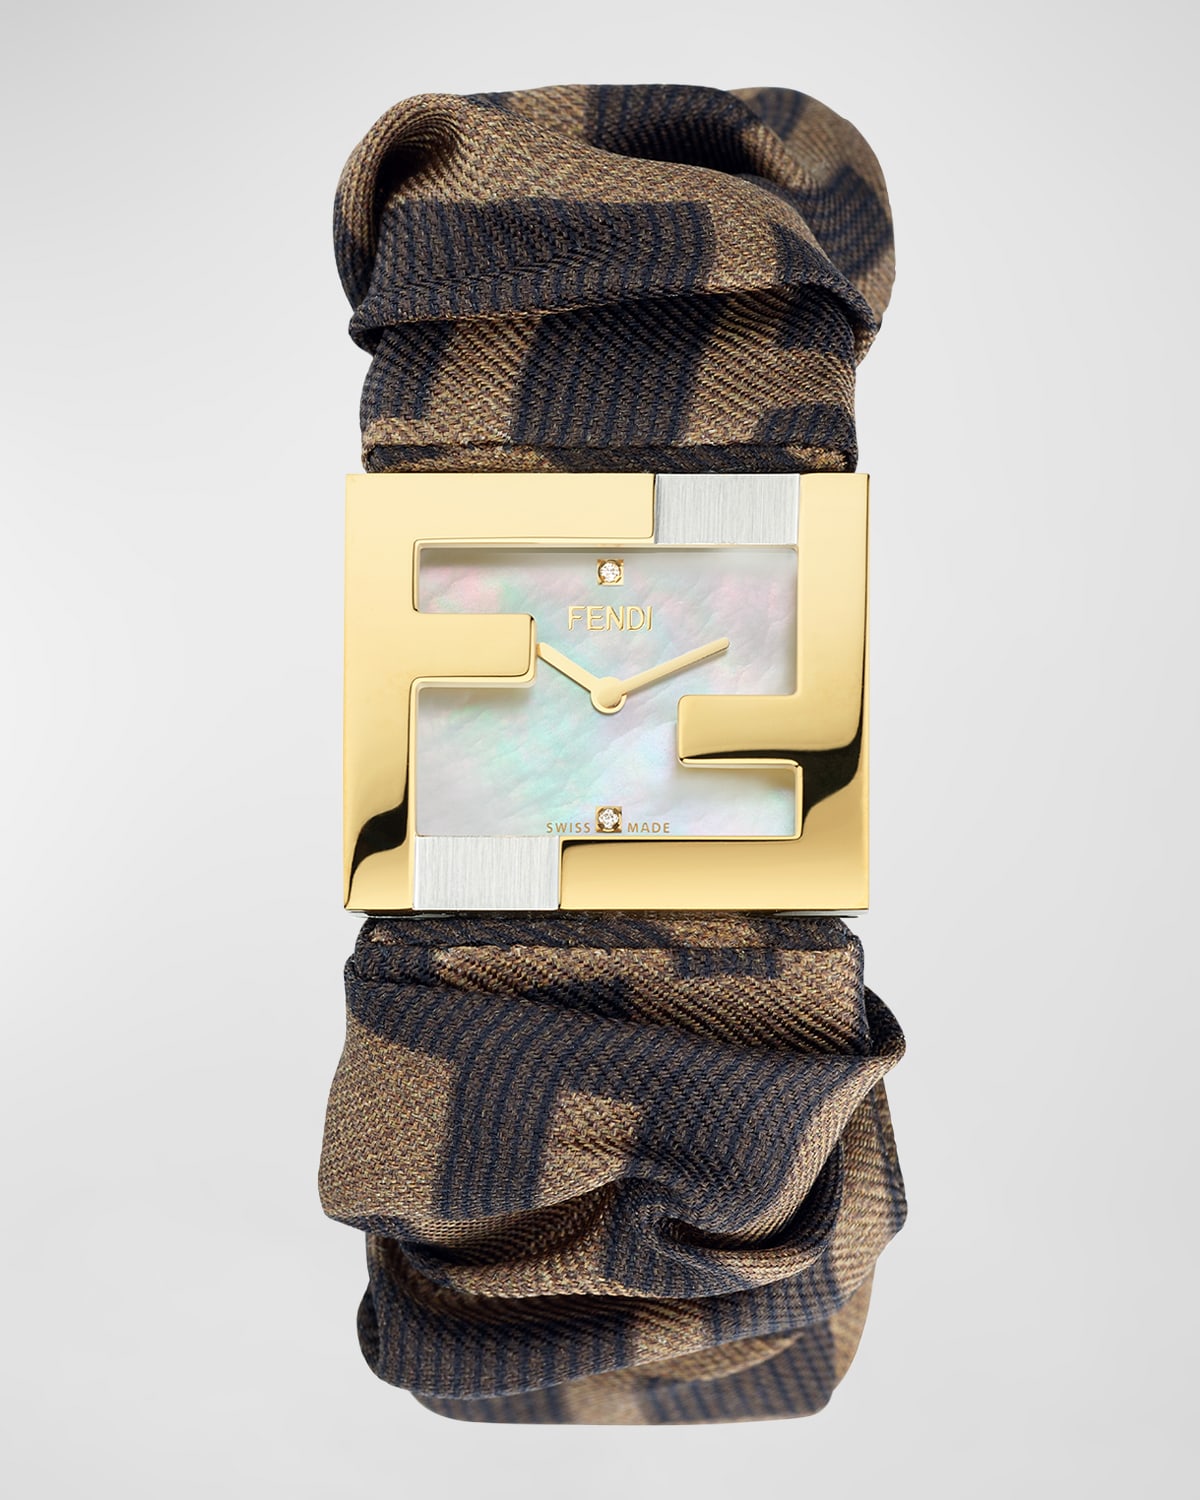 Baguette Monogram Bracelet Watch with Diamonds